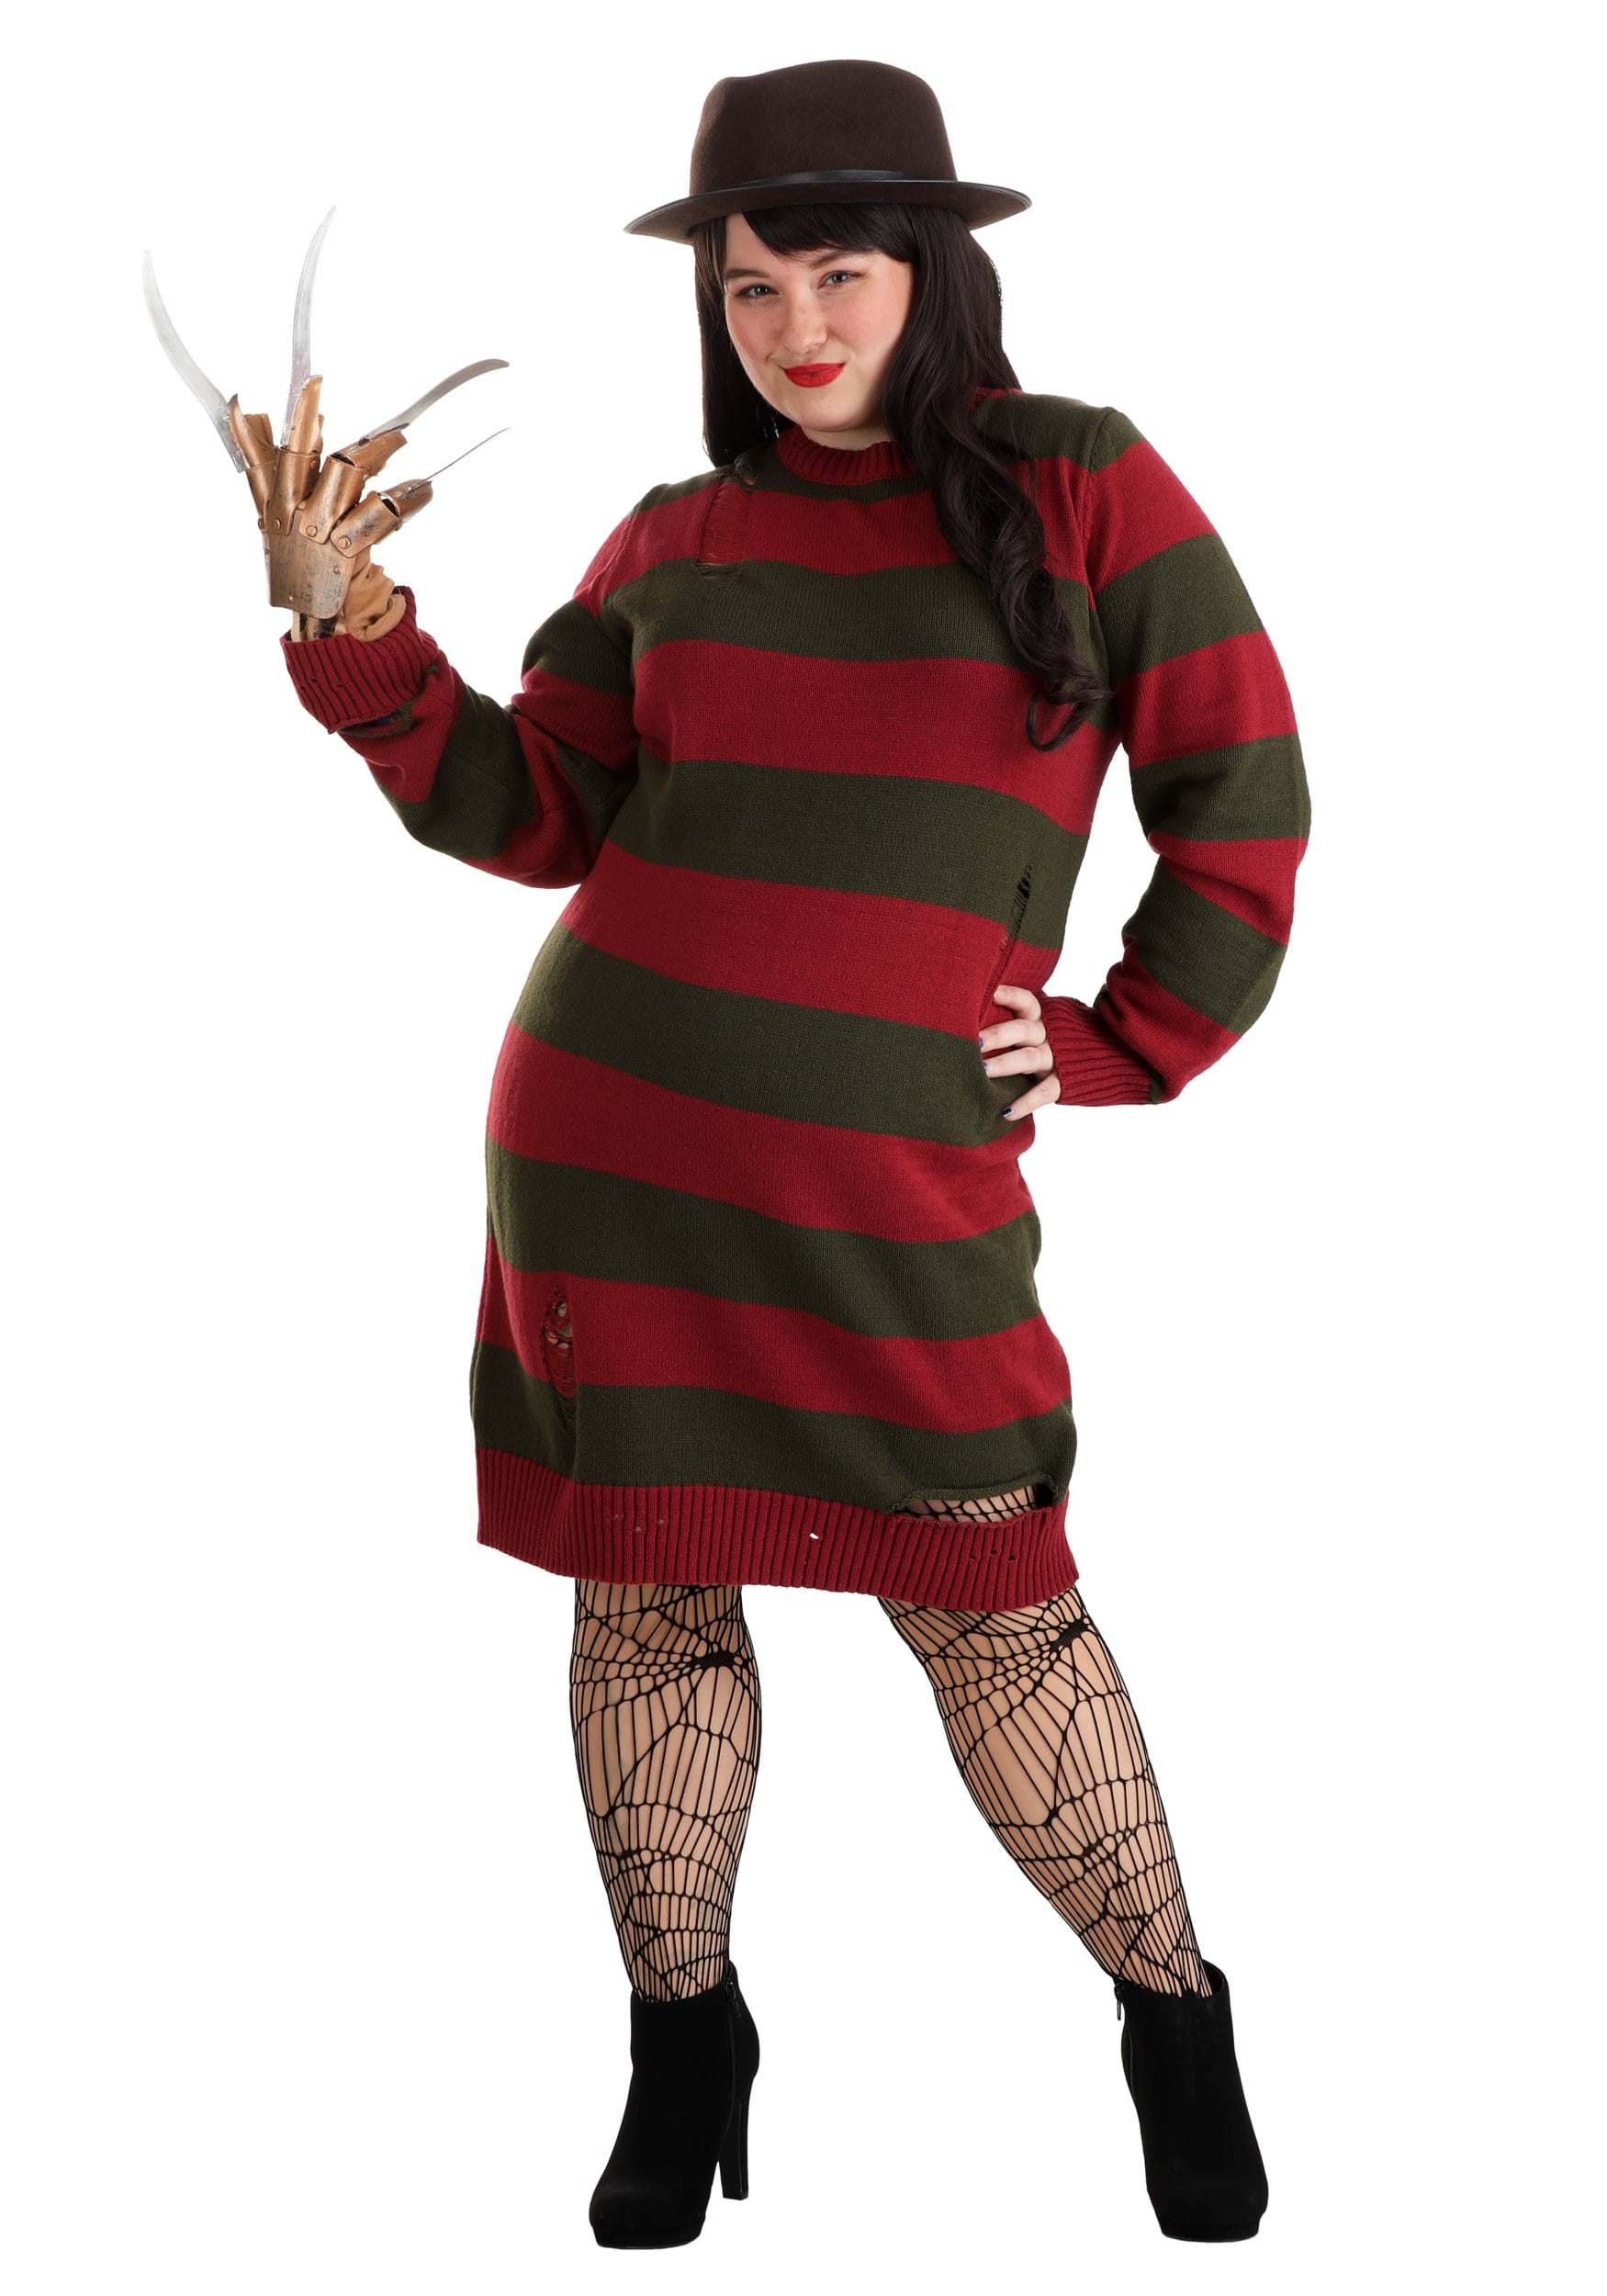 petrolero pensión Electricista Freddy Krueger Plus Size Dress Costume For Adults